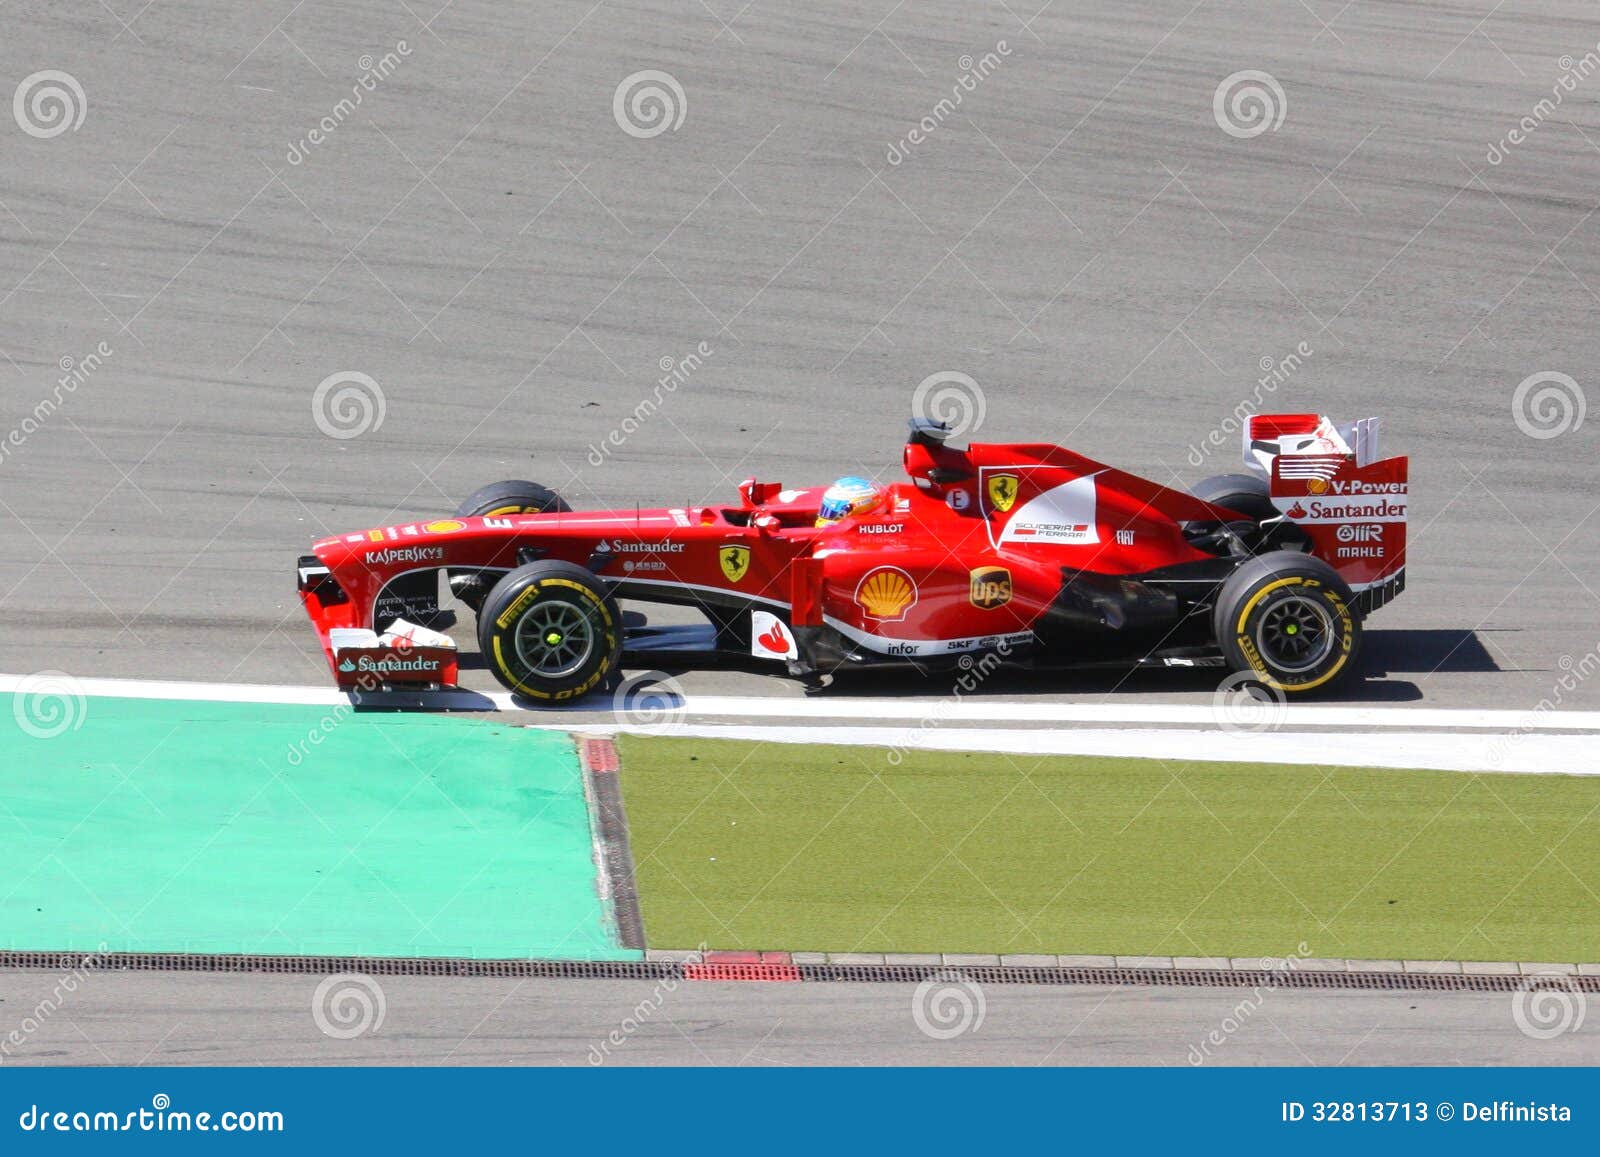 F1 Racing Car : Ferrari Driver Fernando Alonso Editorial Stock Photo  Image: 32813713